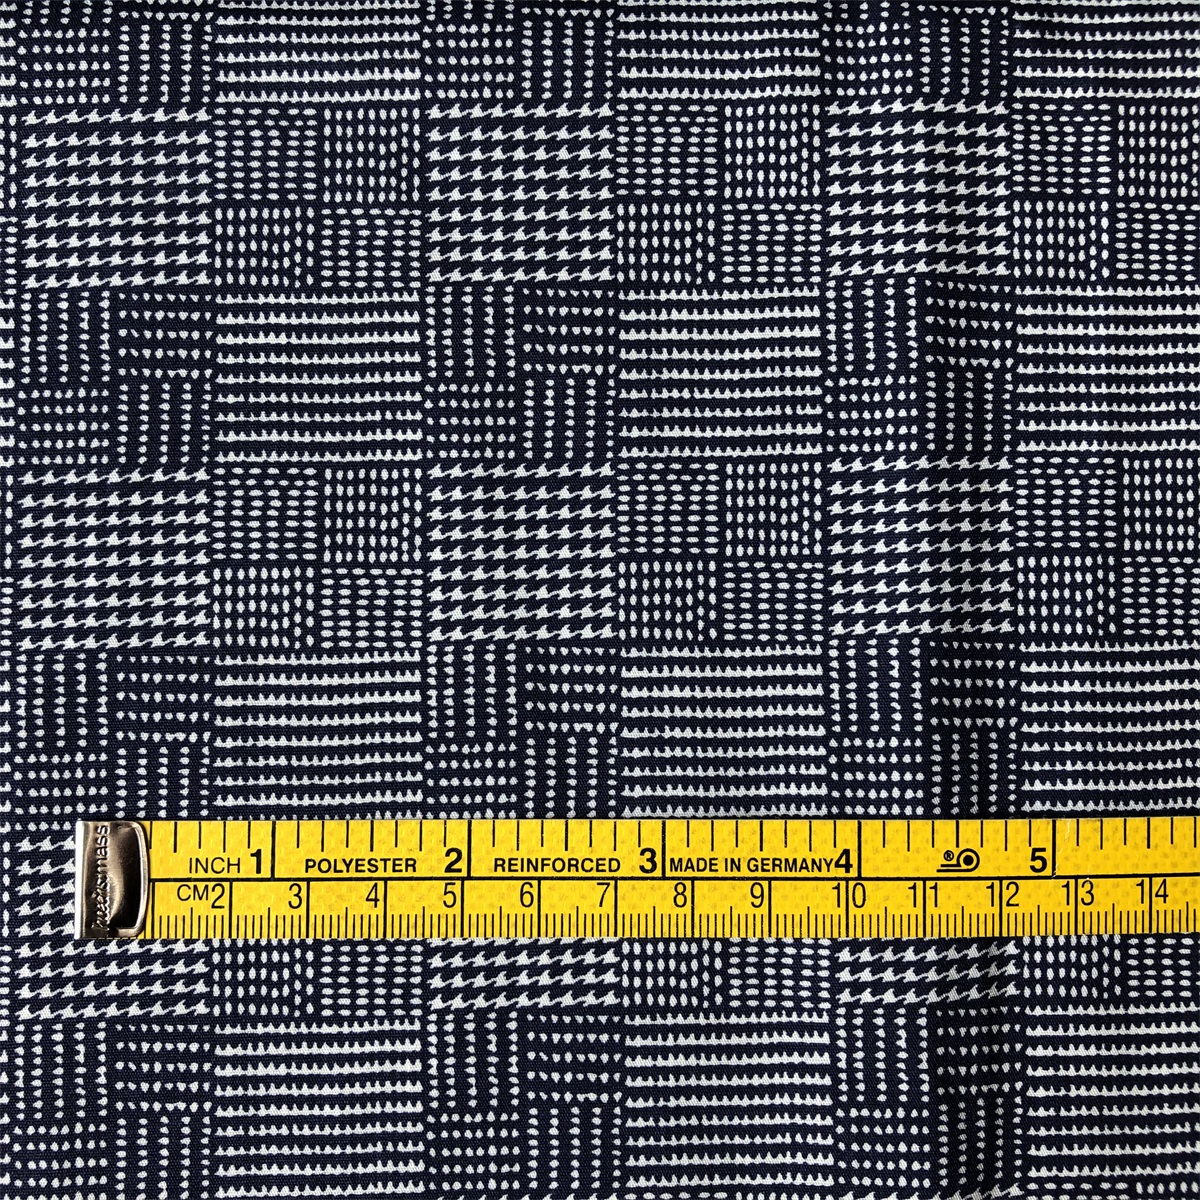 Sun-rising Textile Cotton fabric 40S compact yarn for men's casual shirts 100% cotton poplin printed shirts woven fabric